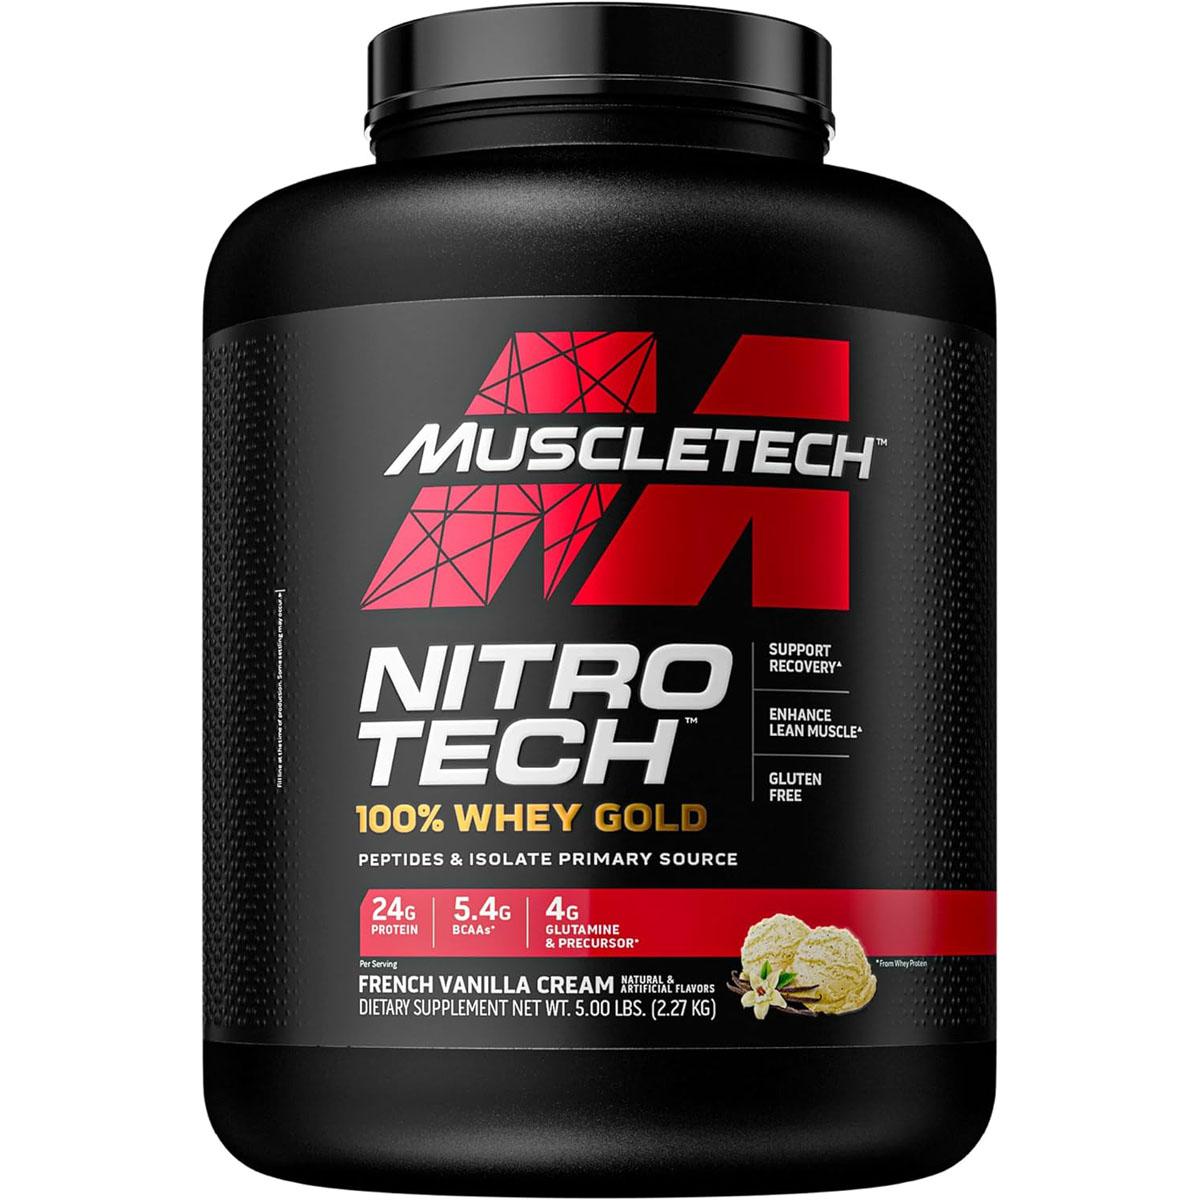 MuscleTech Nitro-Tech Whey Gold Protein Powder 5 Pounds for $35.36 Shipped